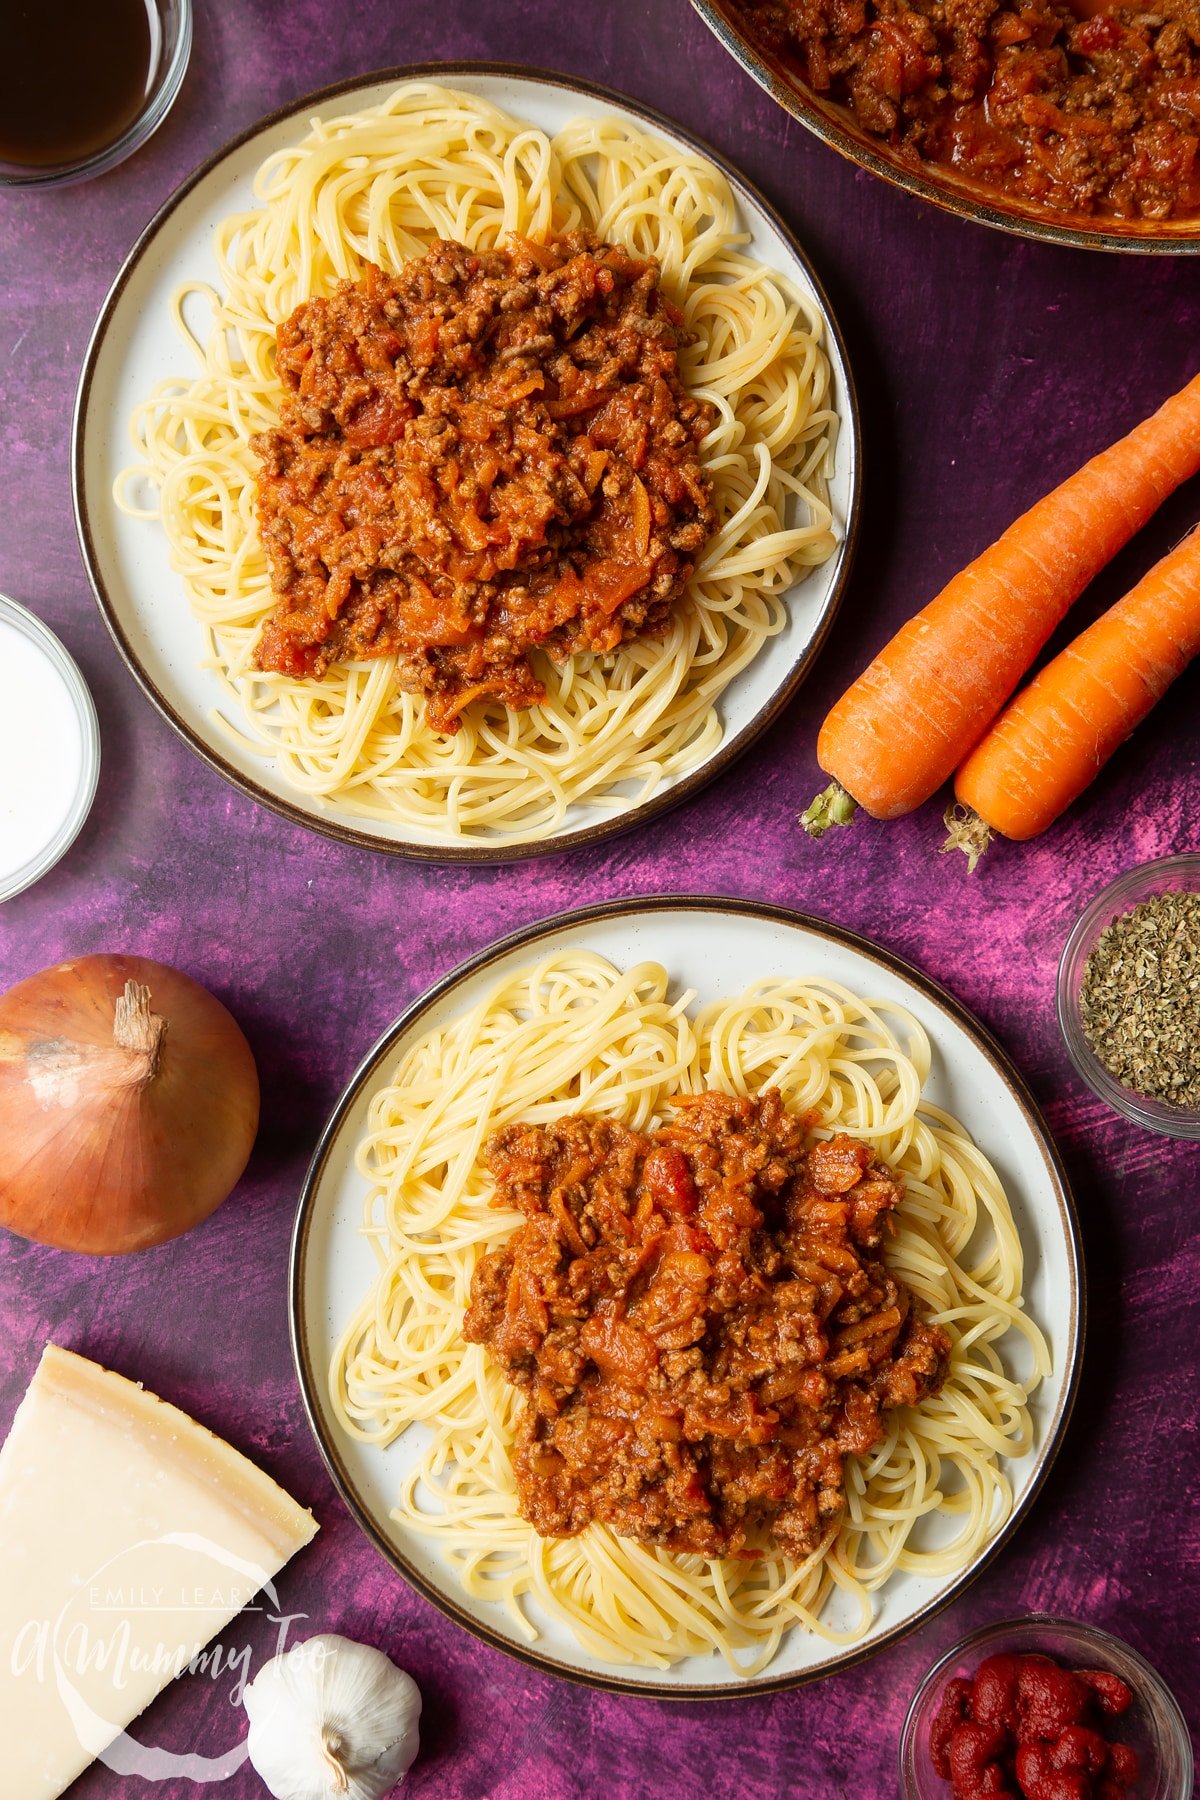 Spaghetti bolognese Gordon Ramsay style served onto two plates.